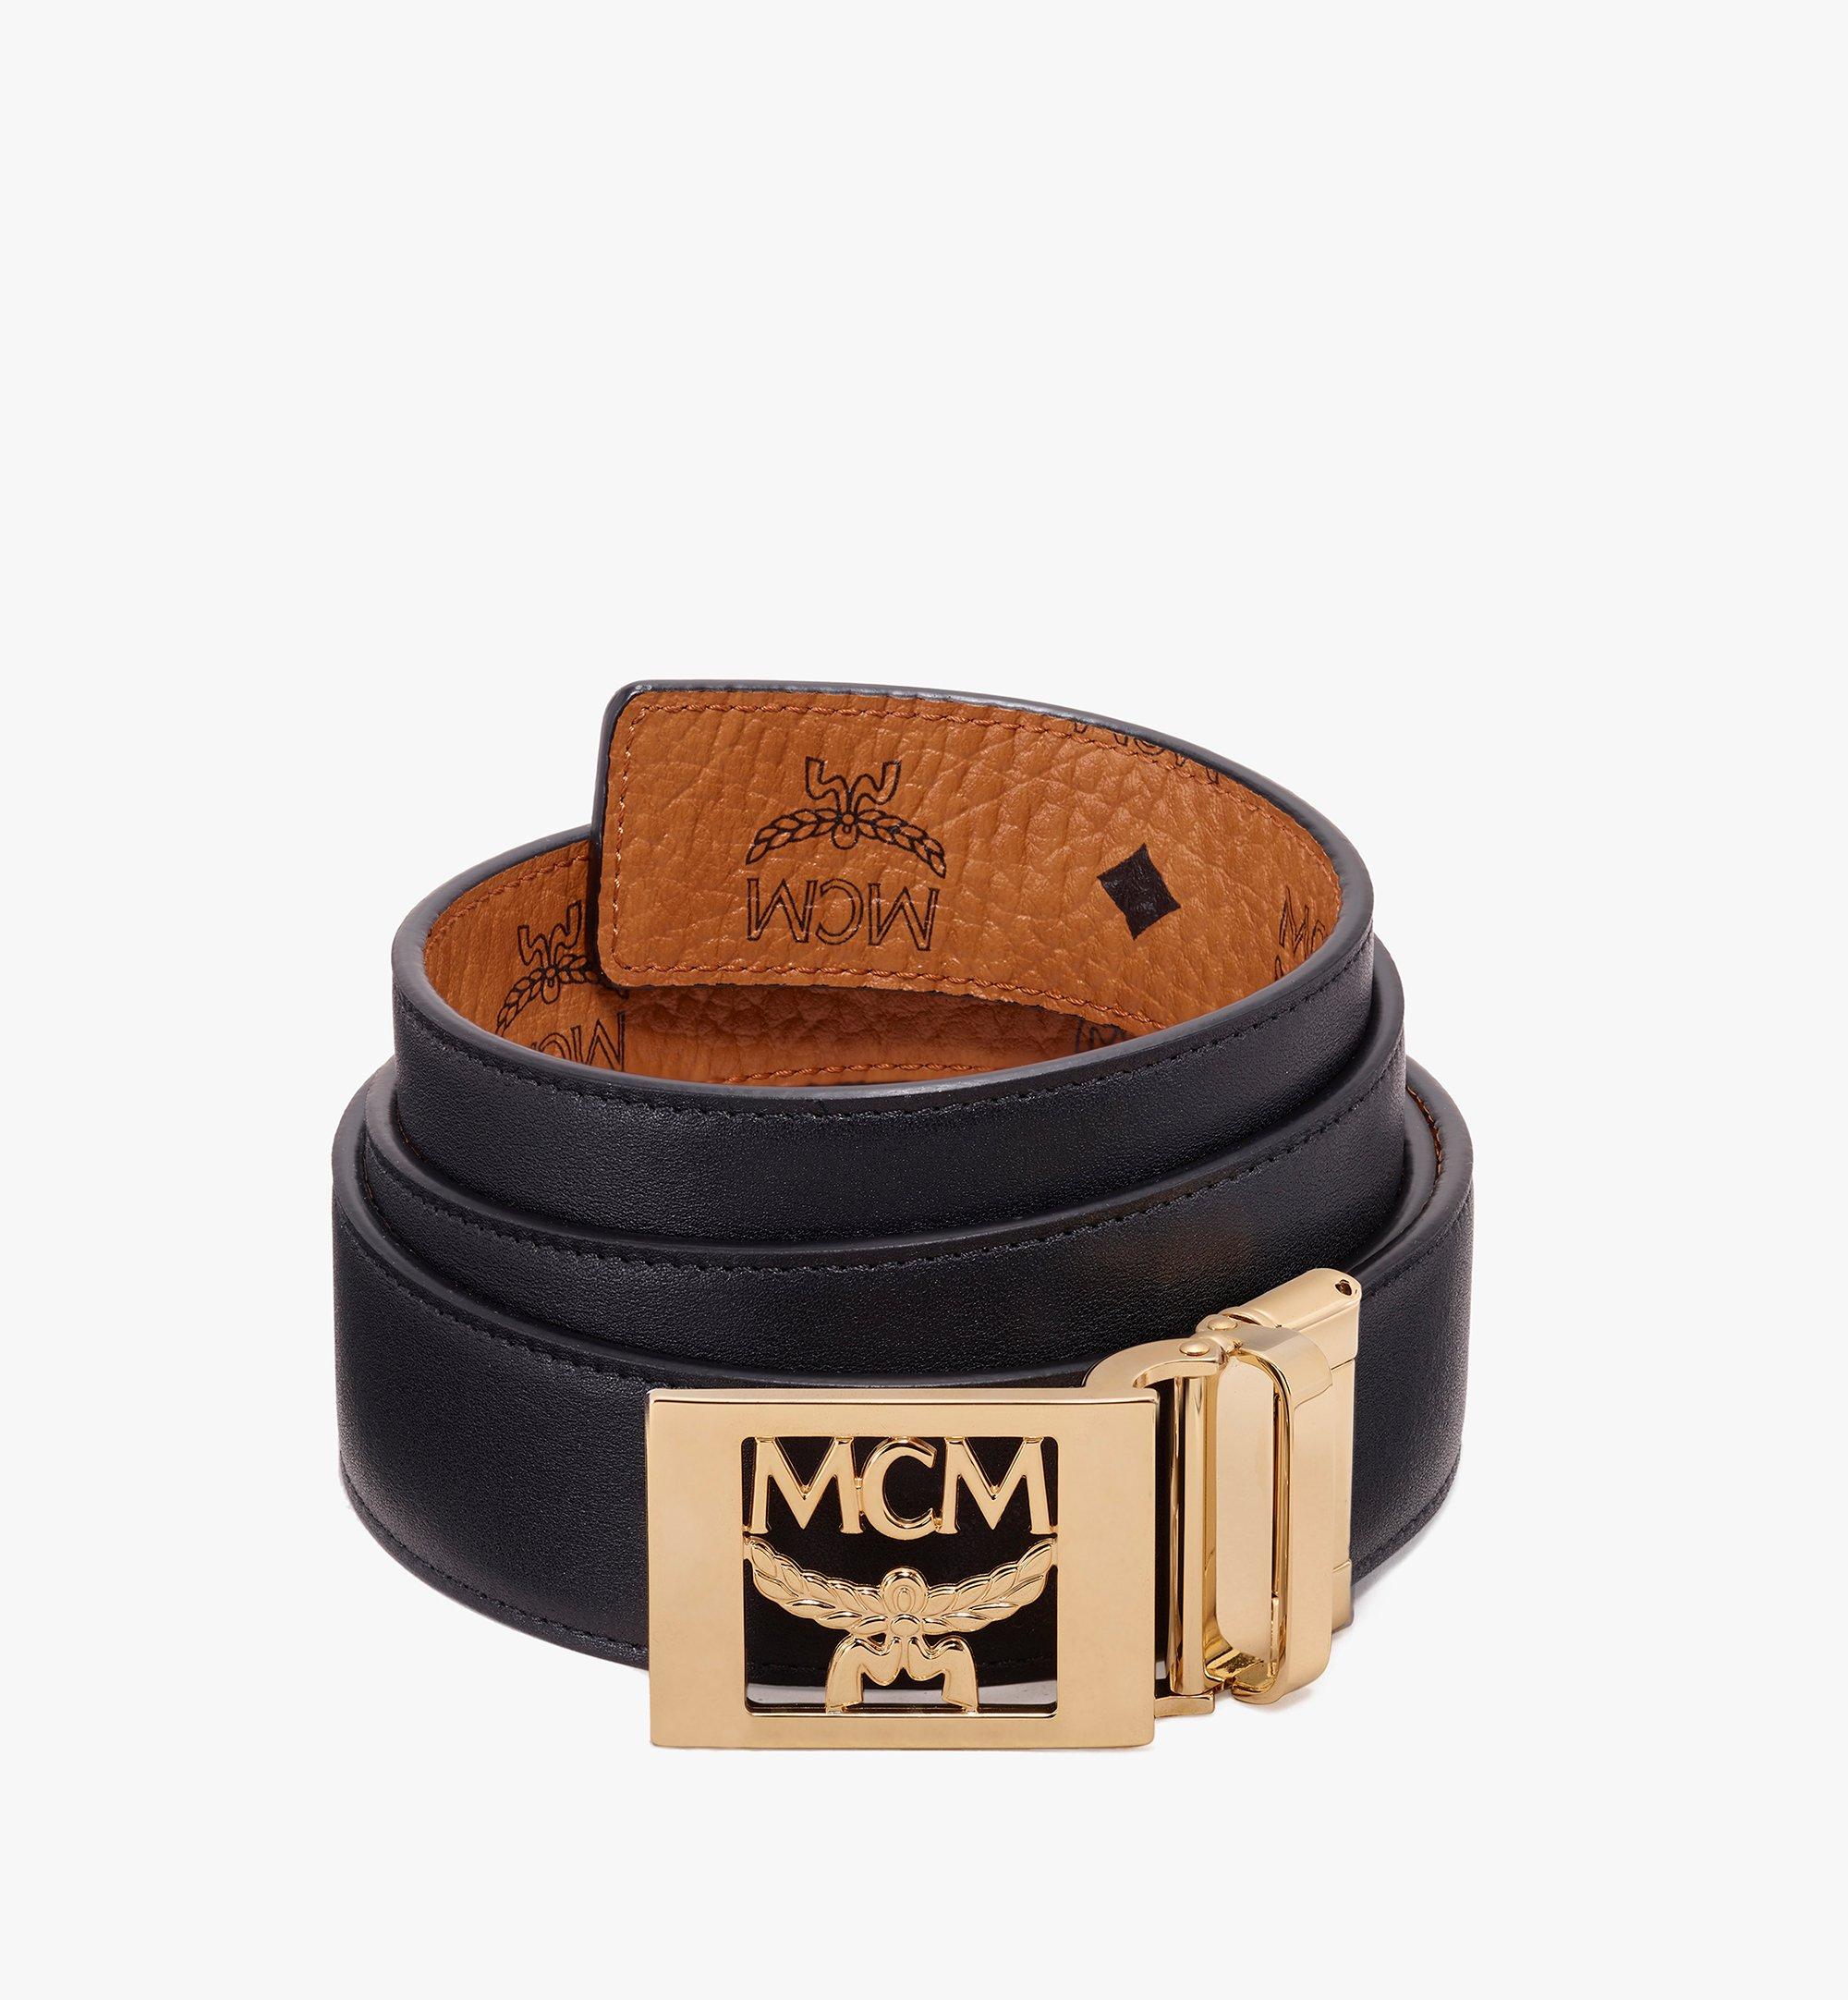 MCM MCM Collection Reversible Belt in Visetos Cognac MYB9AMM36CO001 Alternate View 1